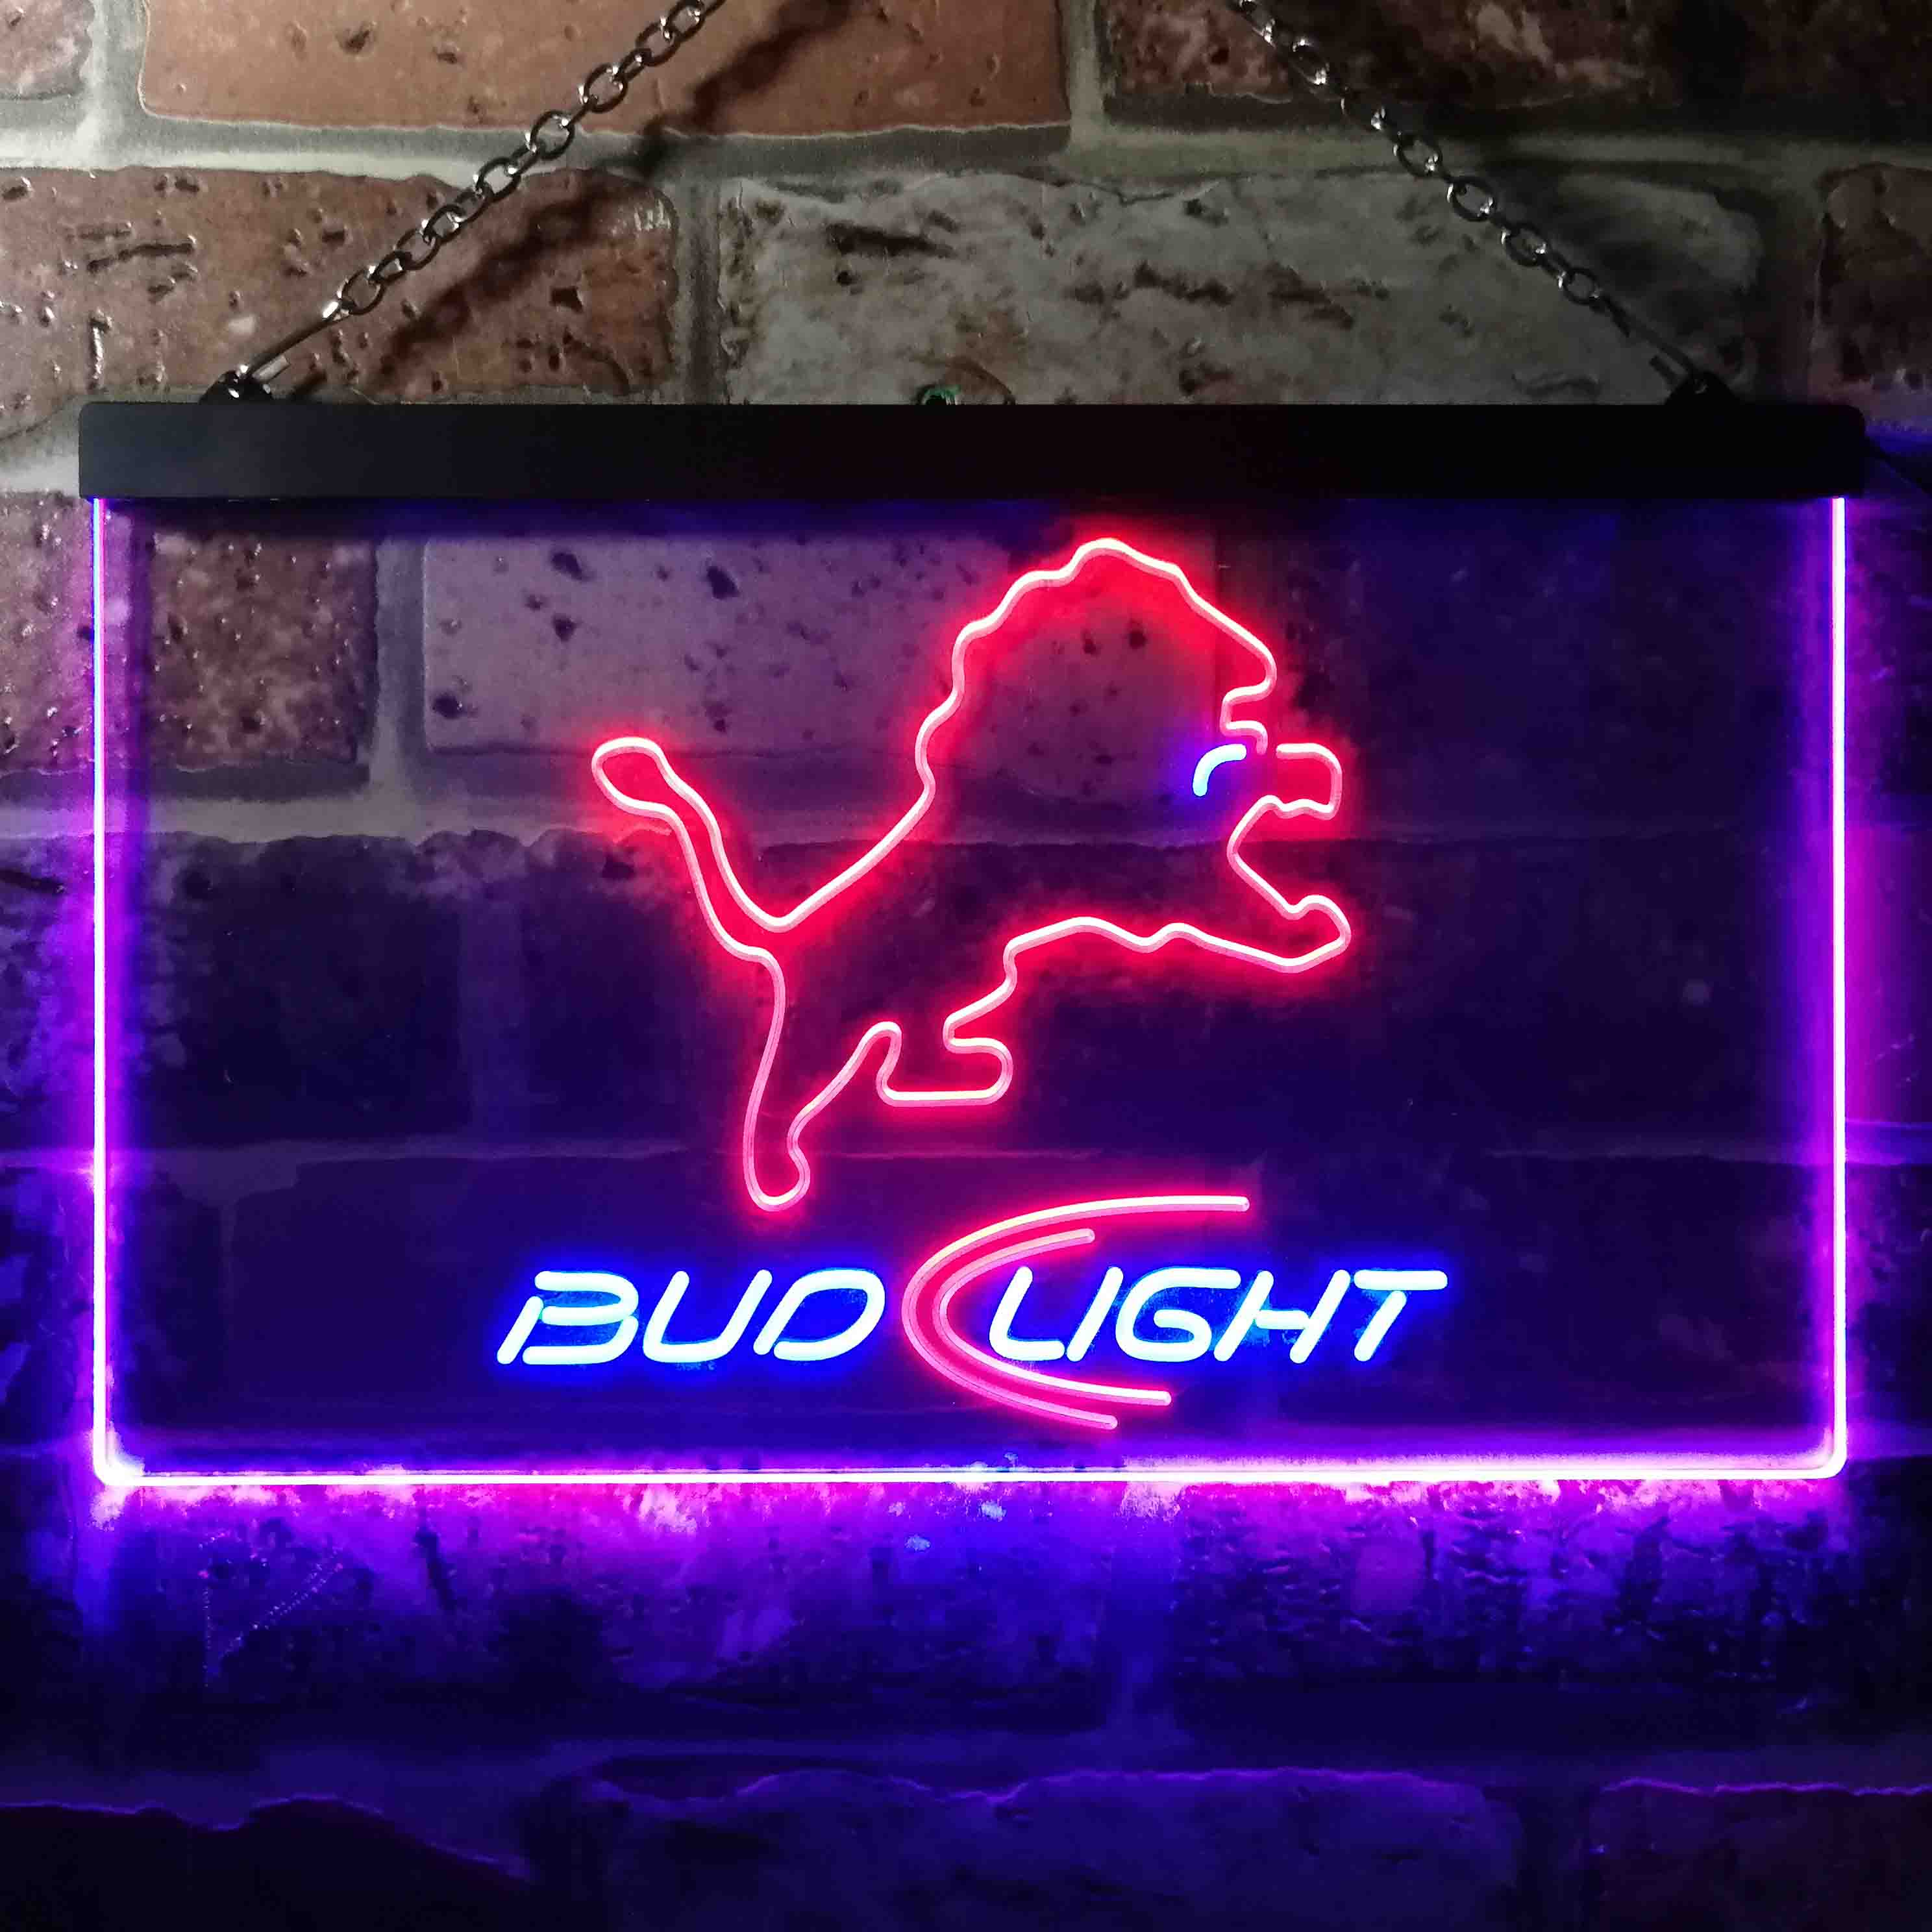 Detroit Lions Bud Light LED Neon Sign